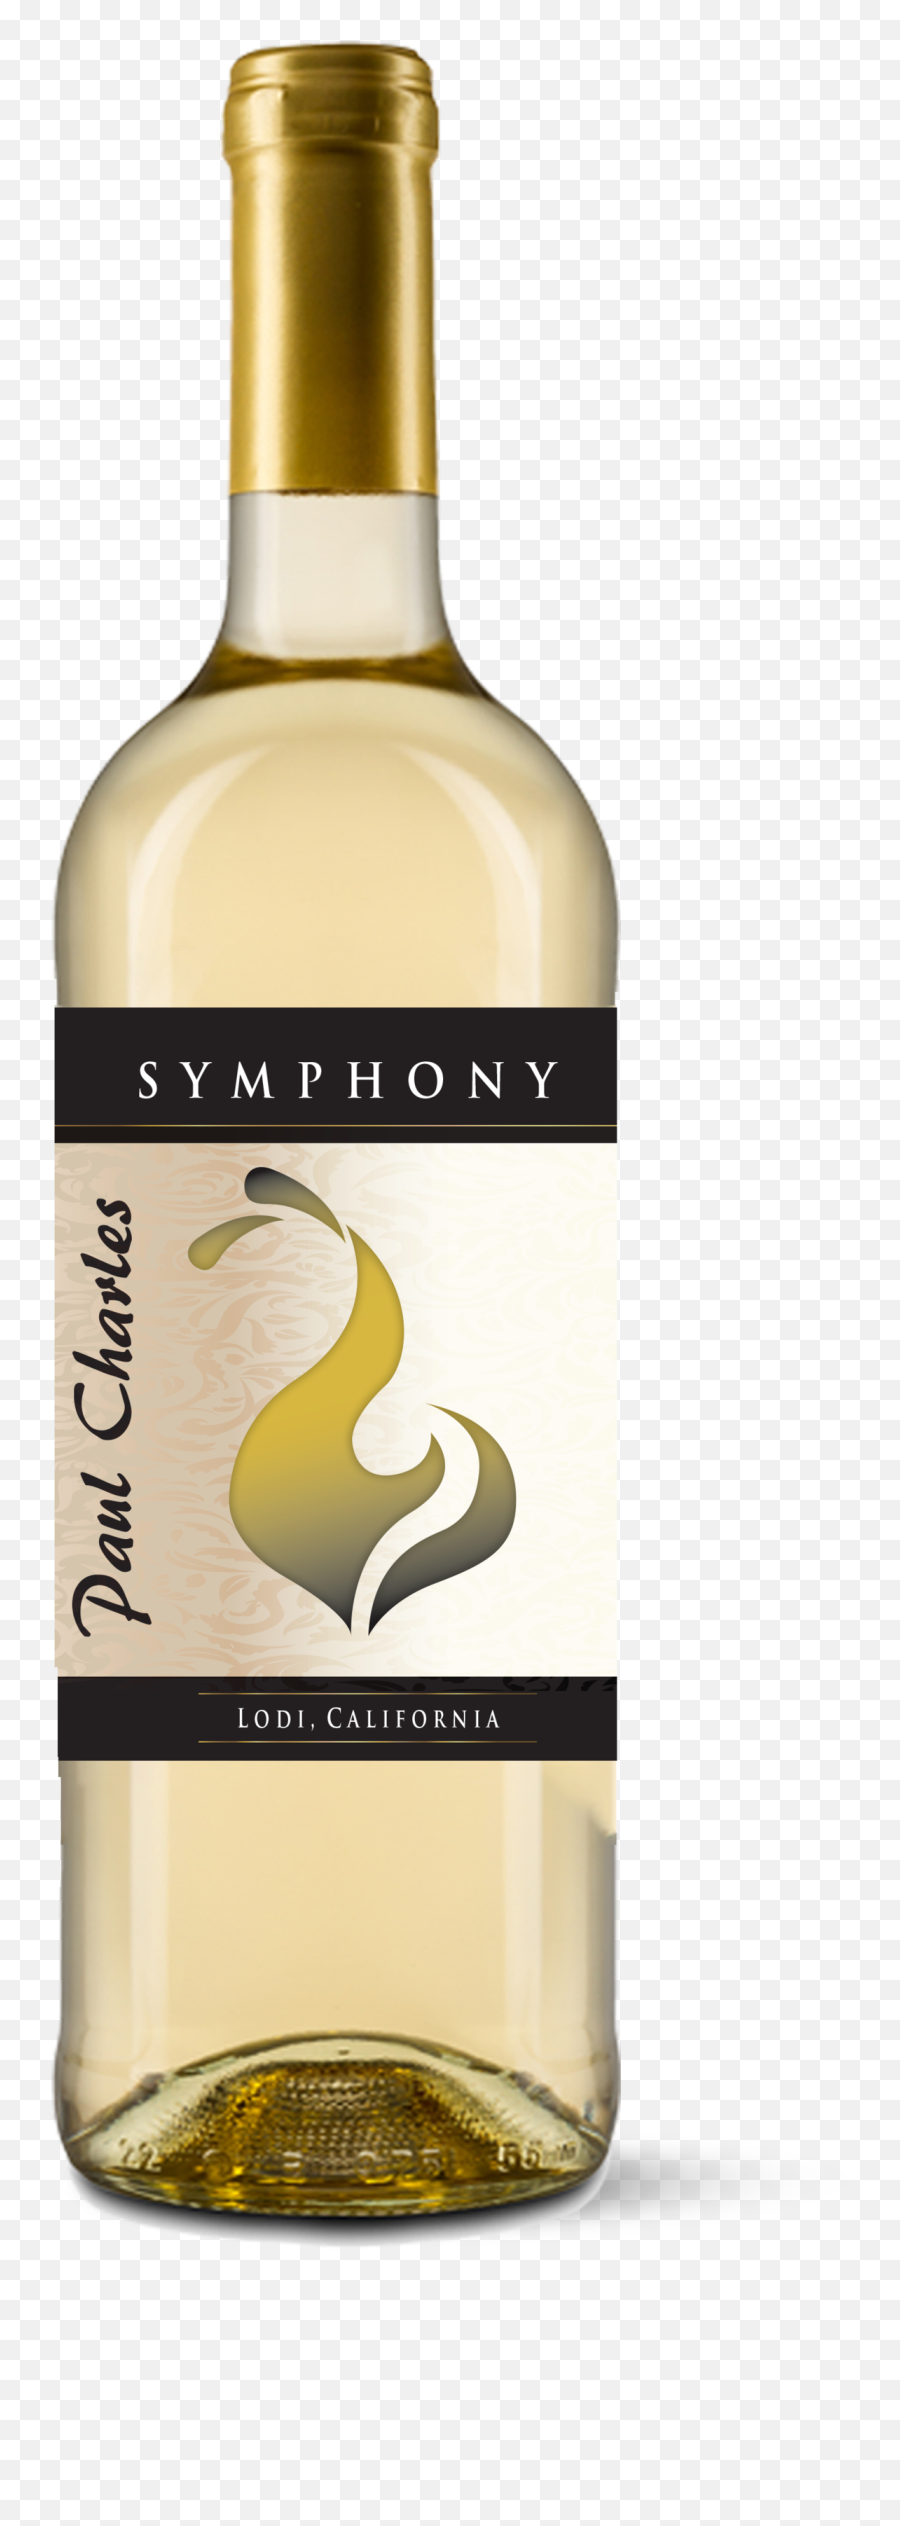 Charles Wine Company Emoji,Wine Bottle Logo